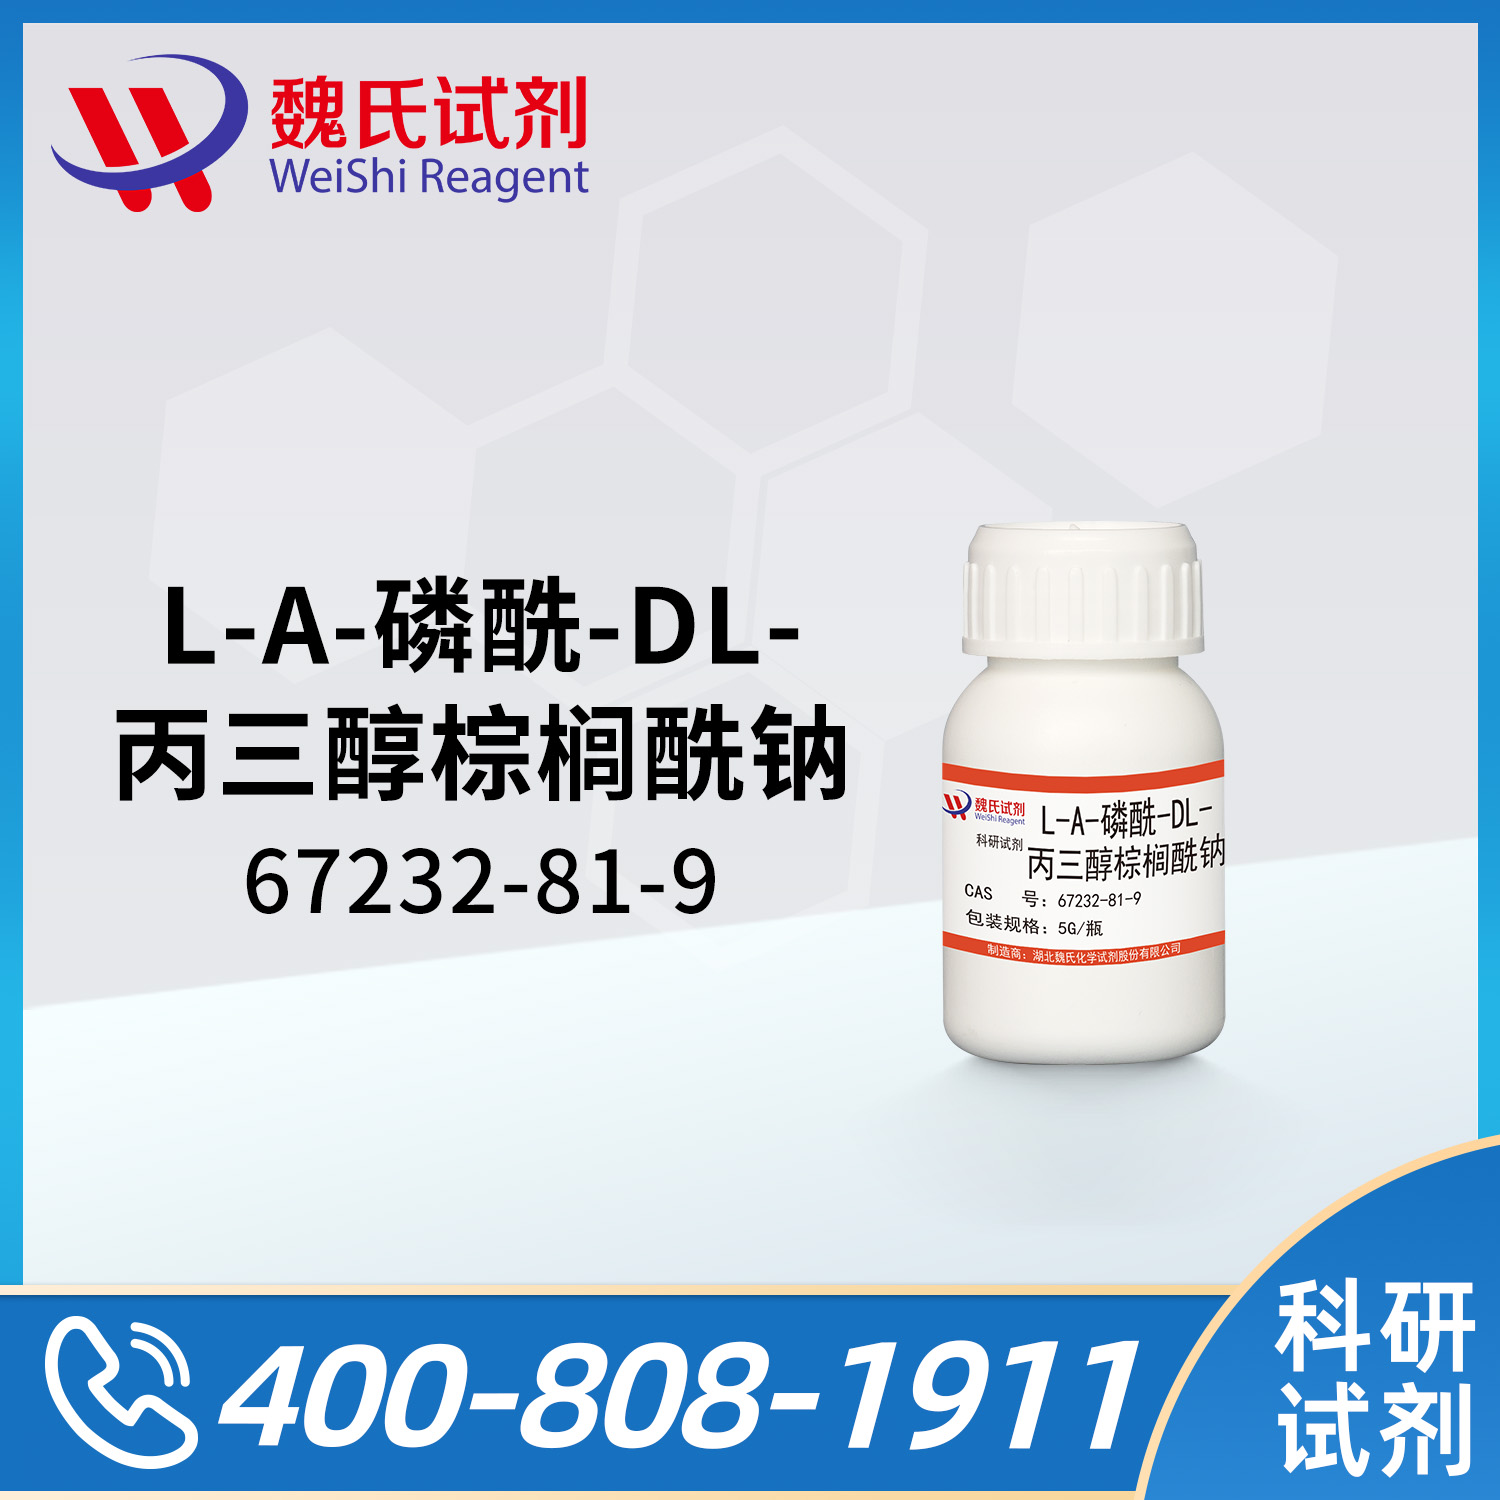 L-A-磷酰-DL-丙三醇棕榈酰钠；DPPG-NA